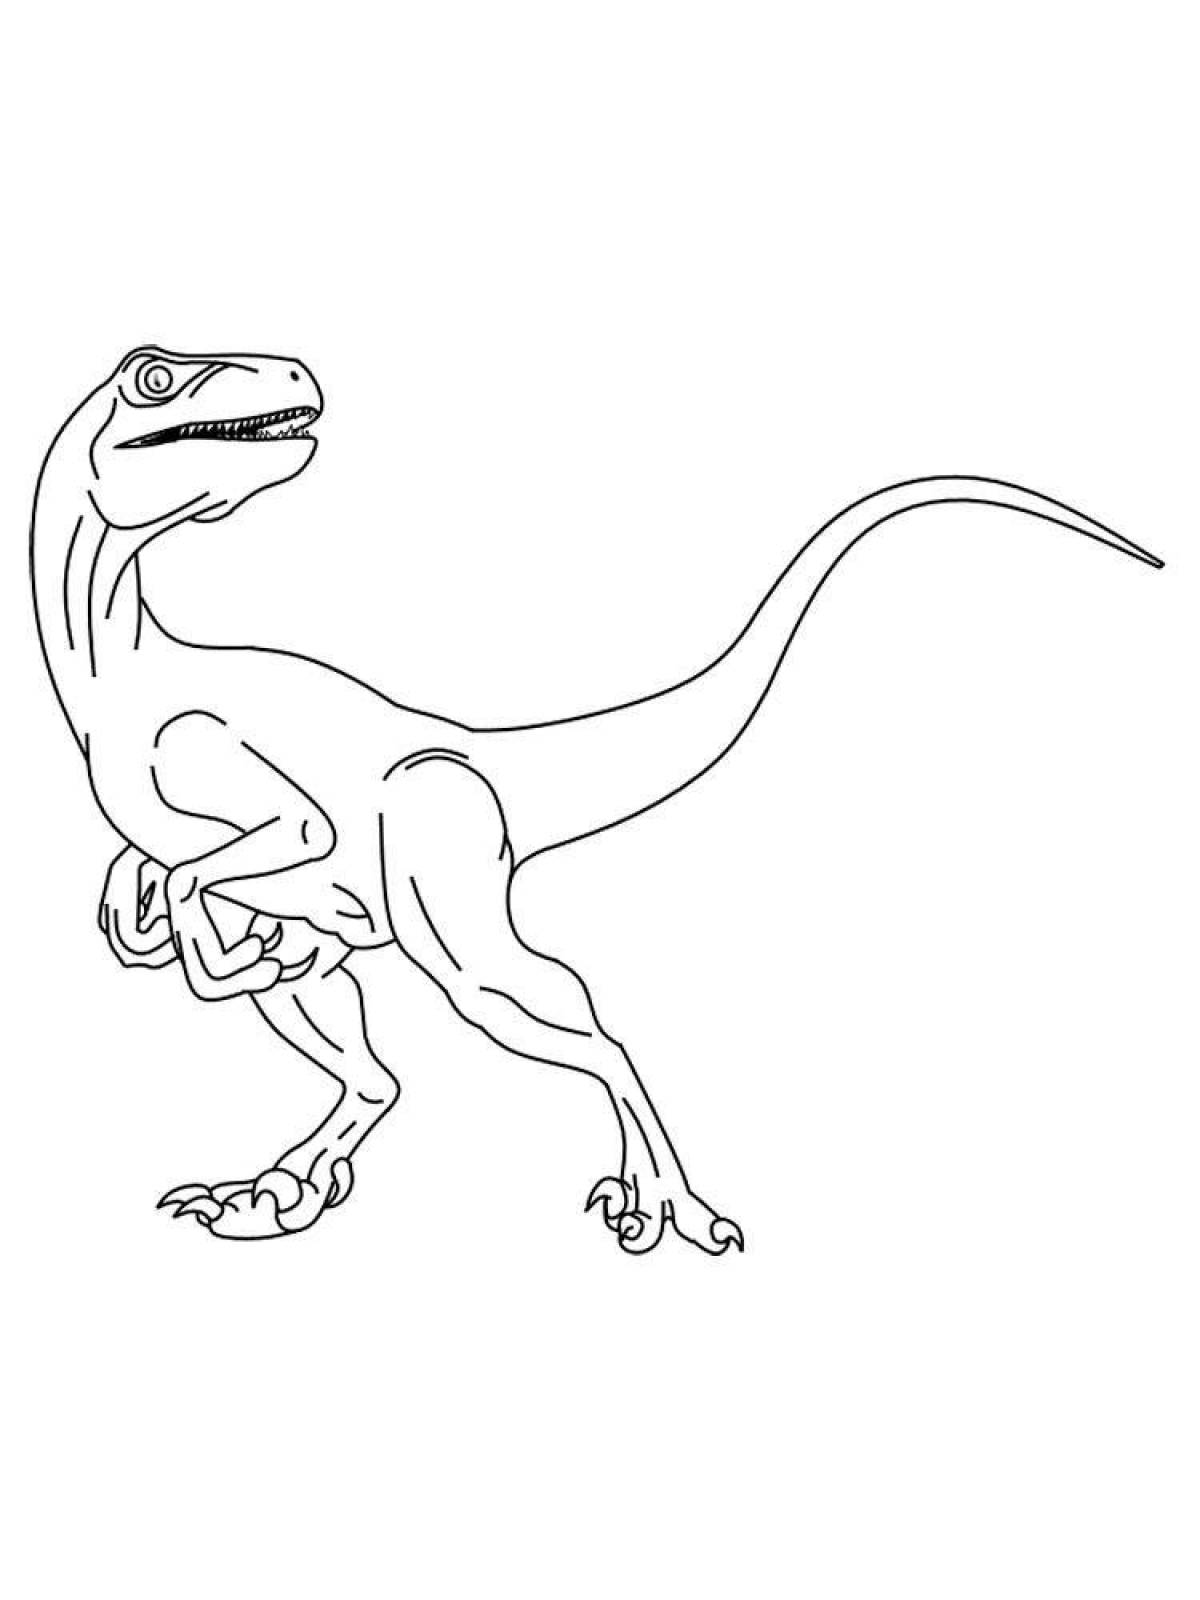 Velociraptor humorous coloring book